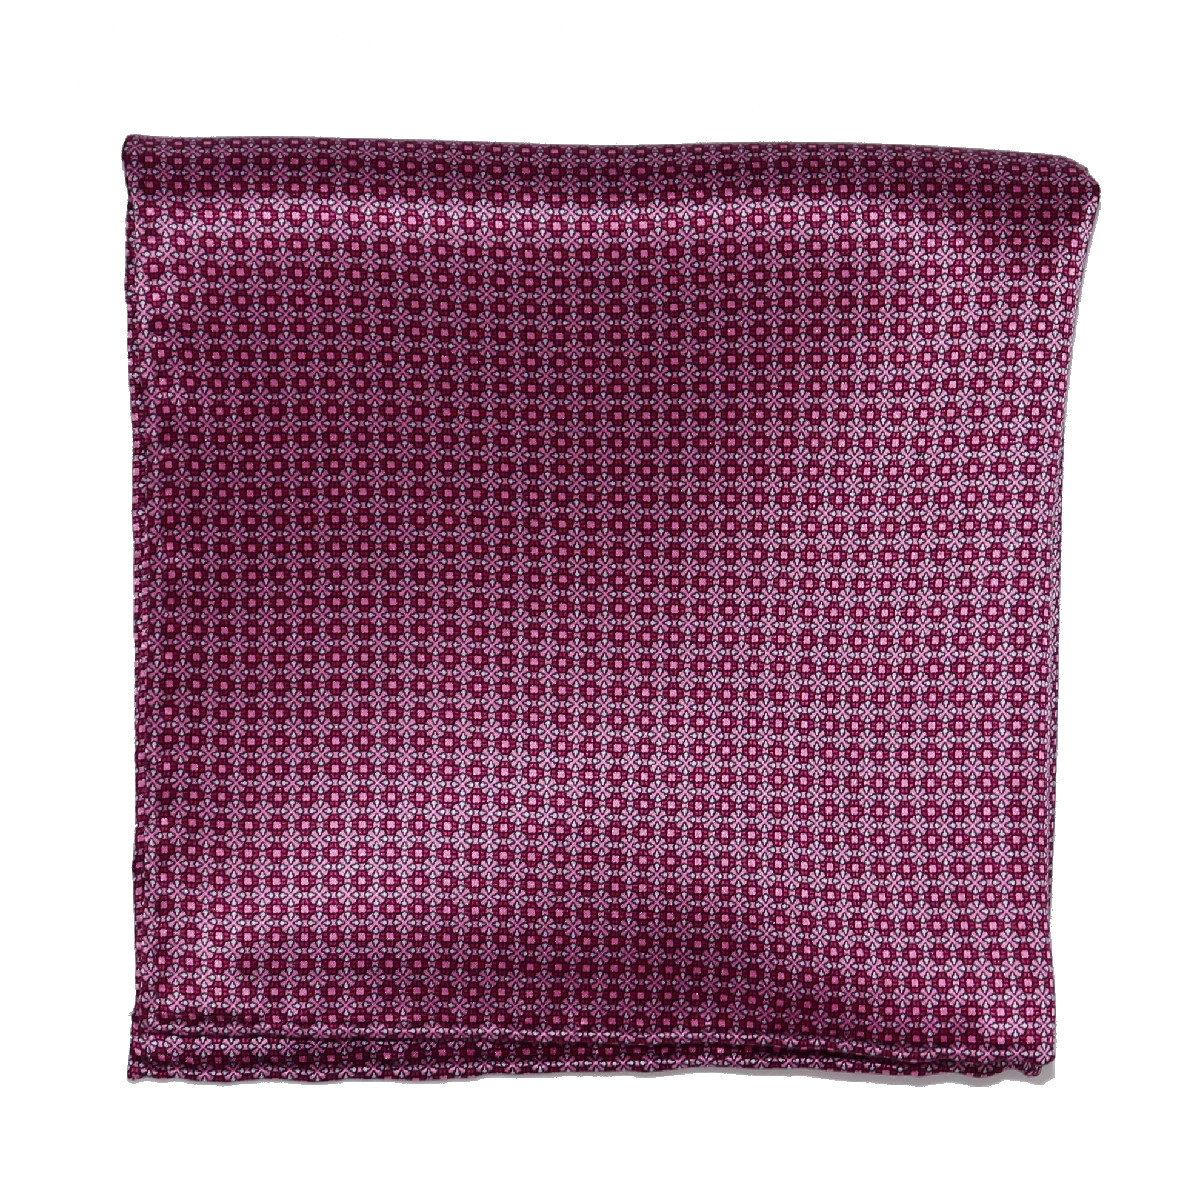 Elegant pocket square 100% silk, checks micropattern, handmade in Italy ...